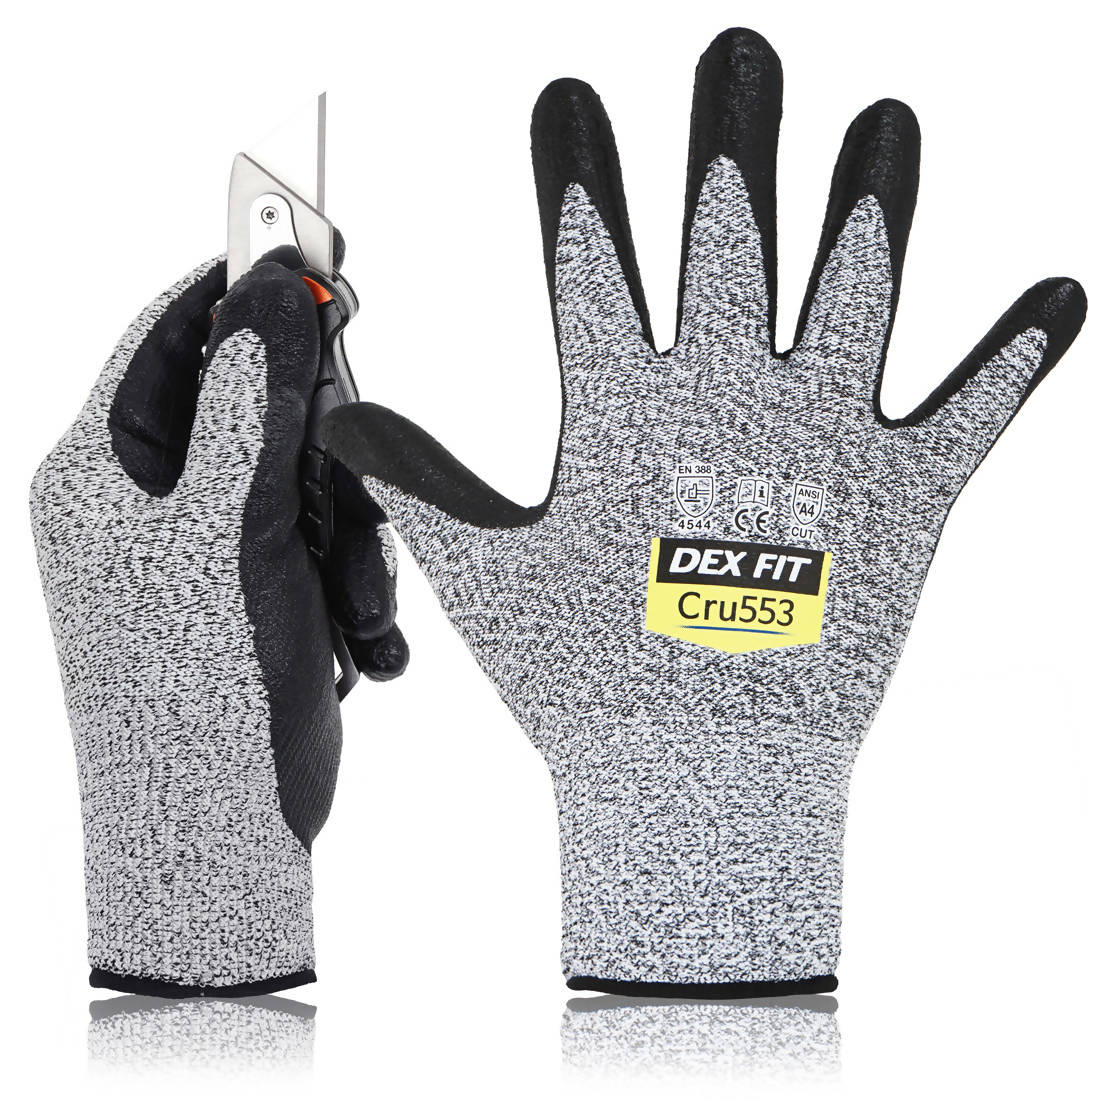 DEX FIT Level 5 Cut Resistant Gloves Cru553, 3D Comfort Fit, Nitrile Foam Coated, Smart Touch 3 Pairs